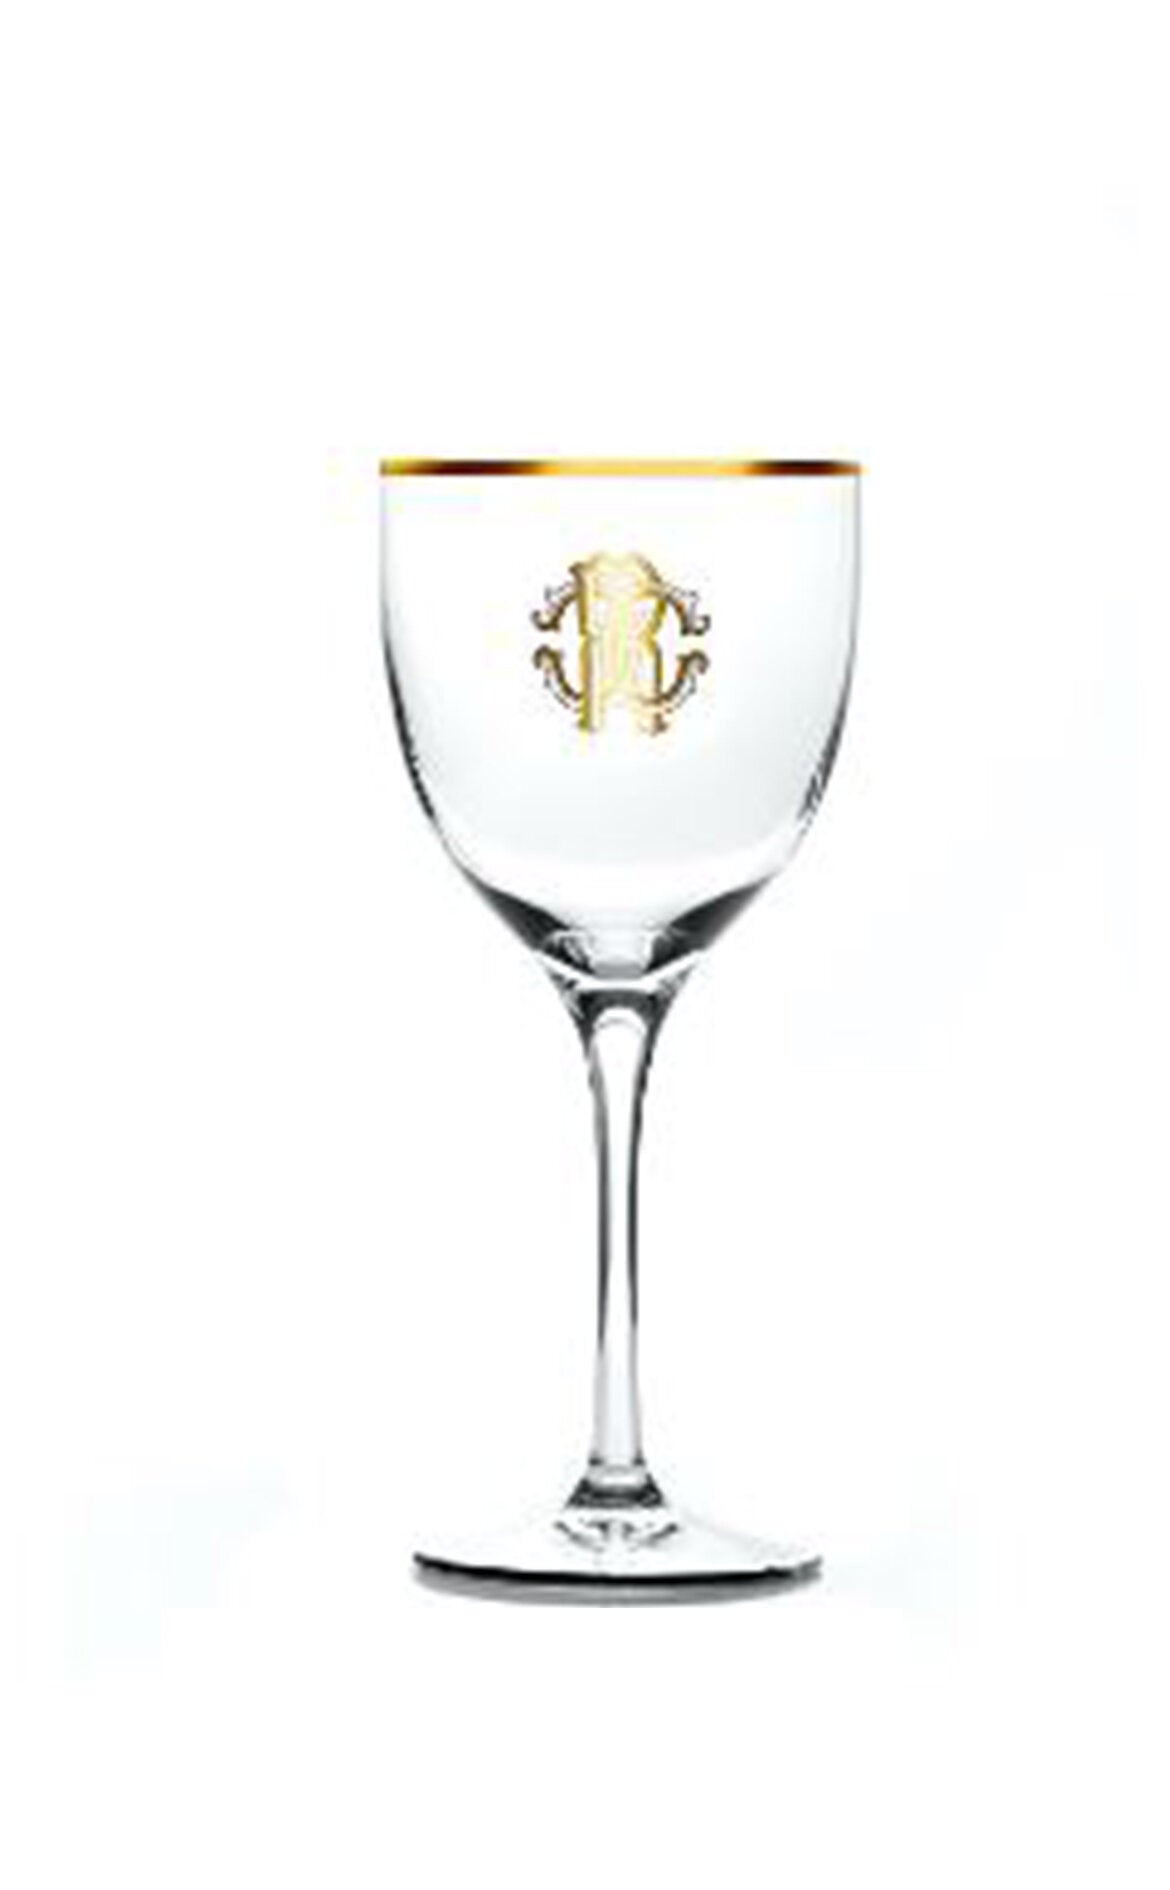 ROBERTO CAVALLI Monogramma Şarap Kadehi, Altın, 0,21 L D’Maison 